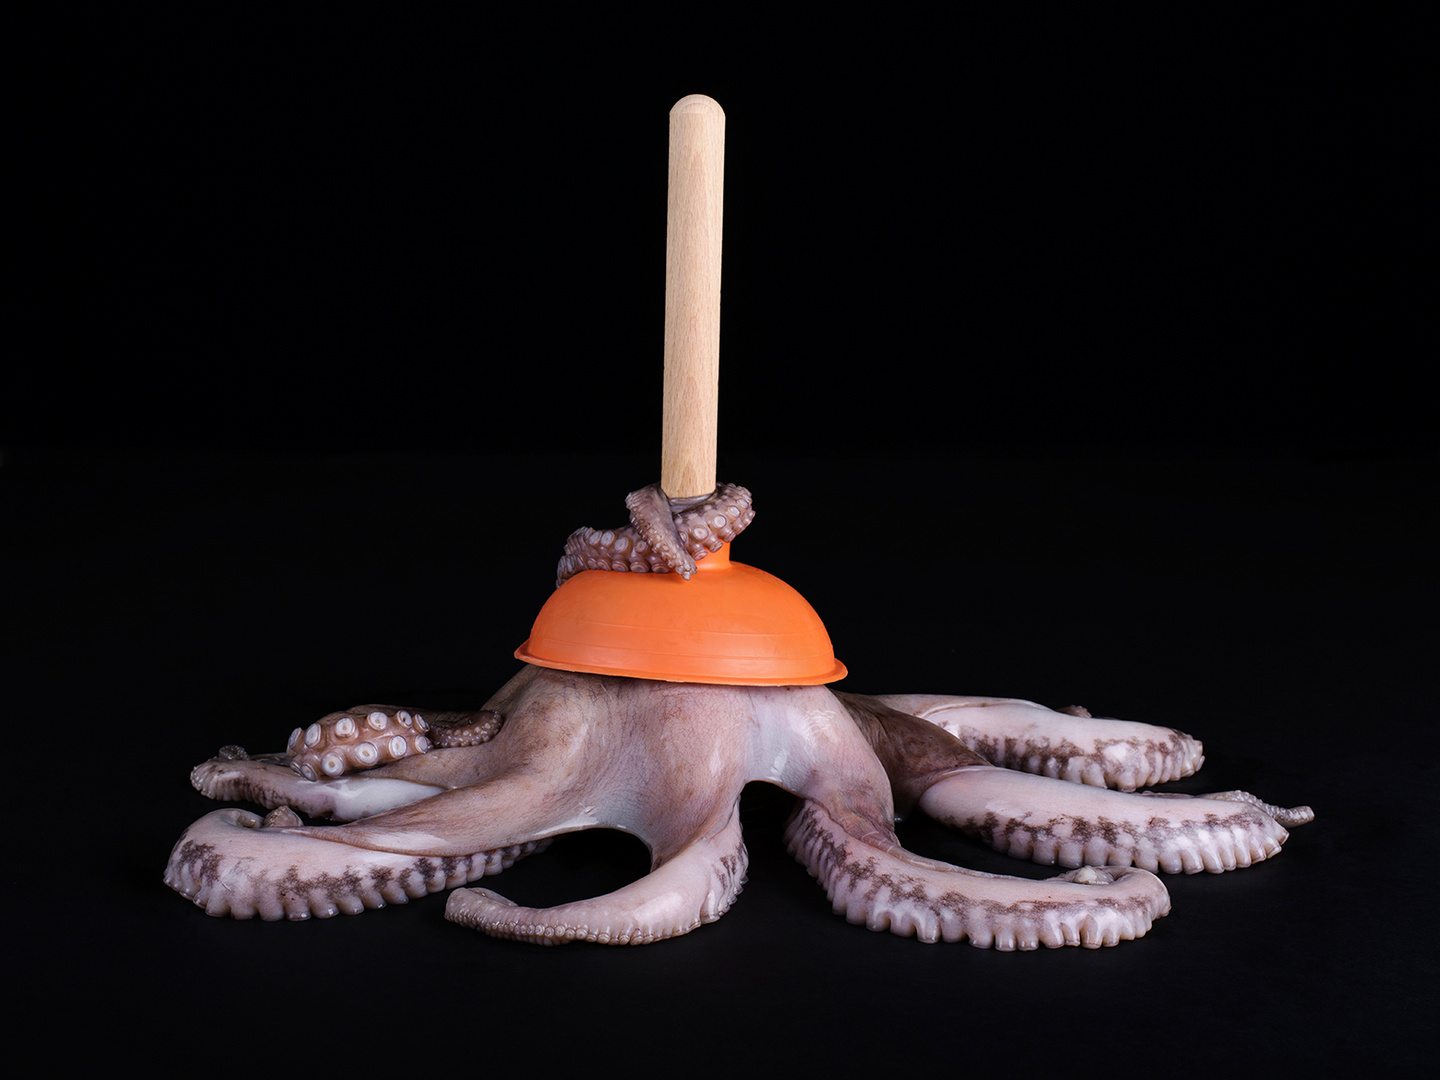 Octopus, dicembre 2013